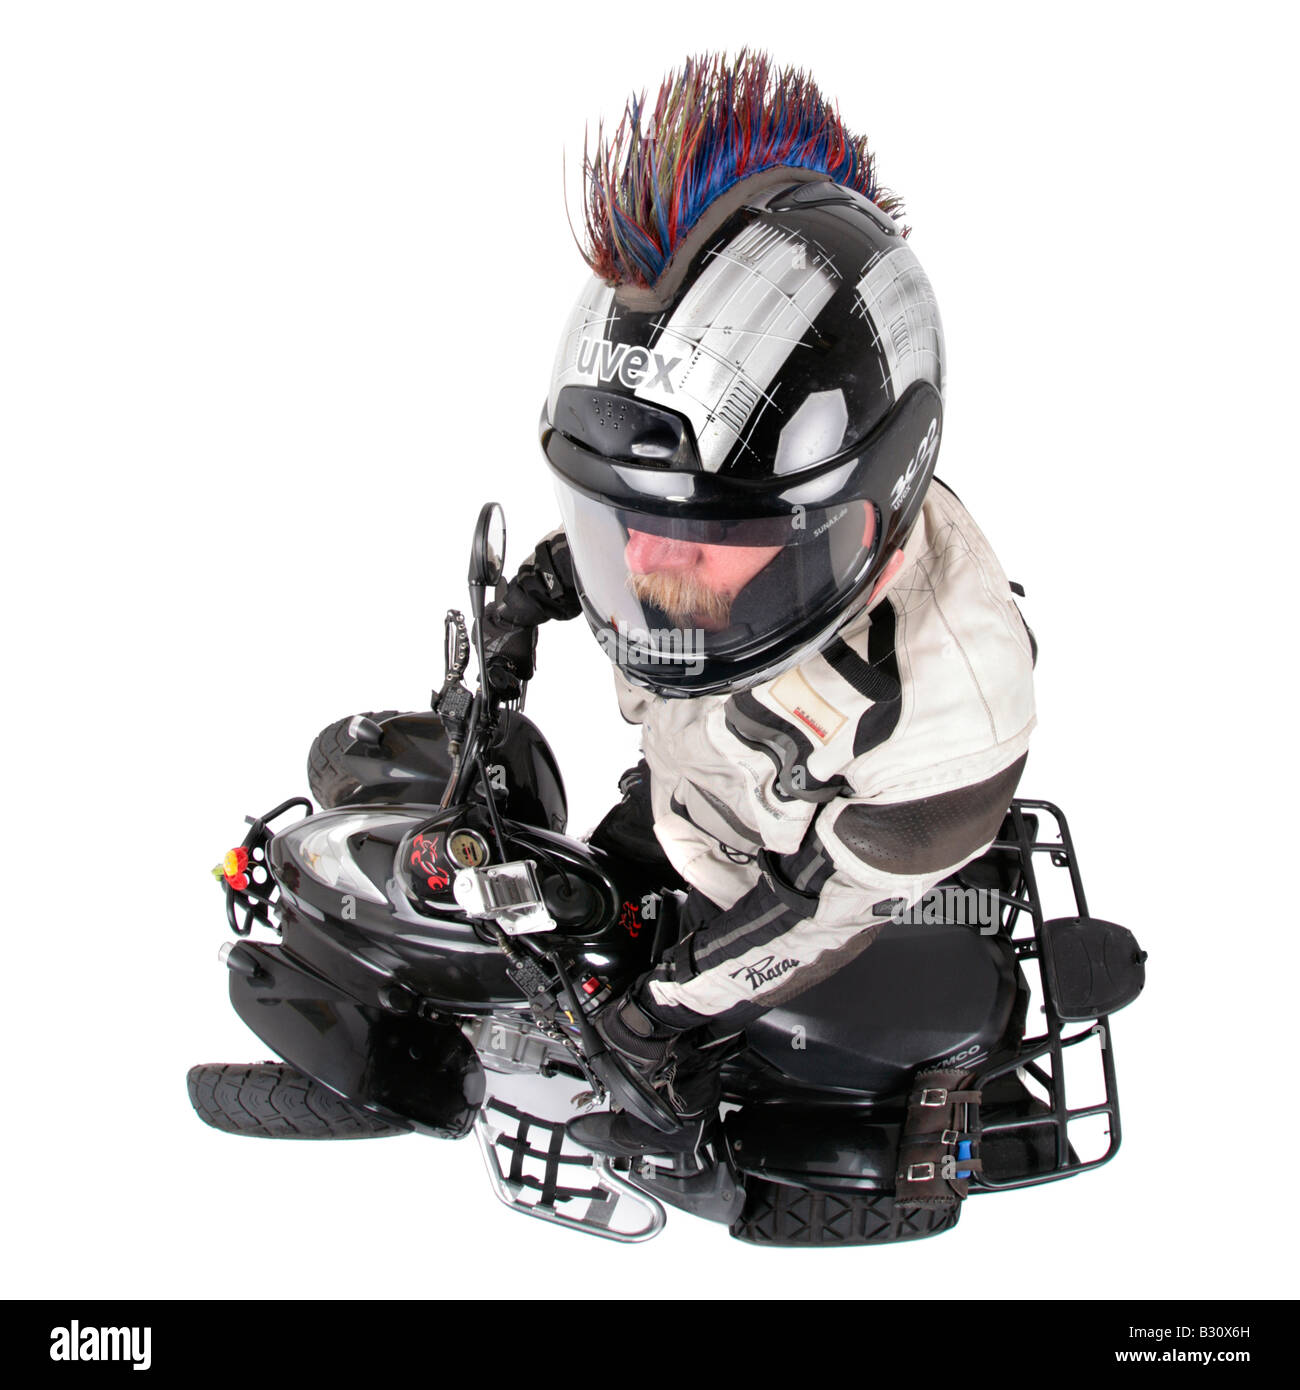 quod biker with helmet and vehicle Stock Photo